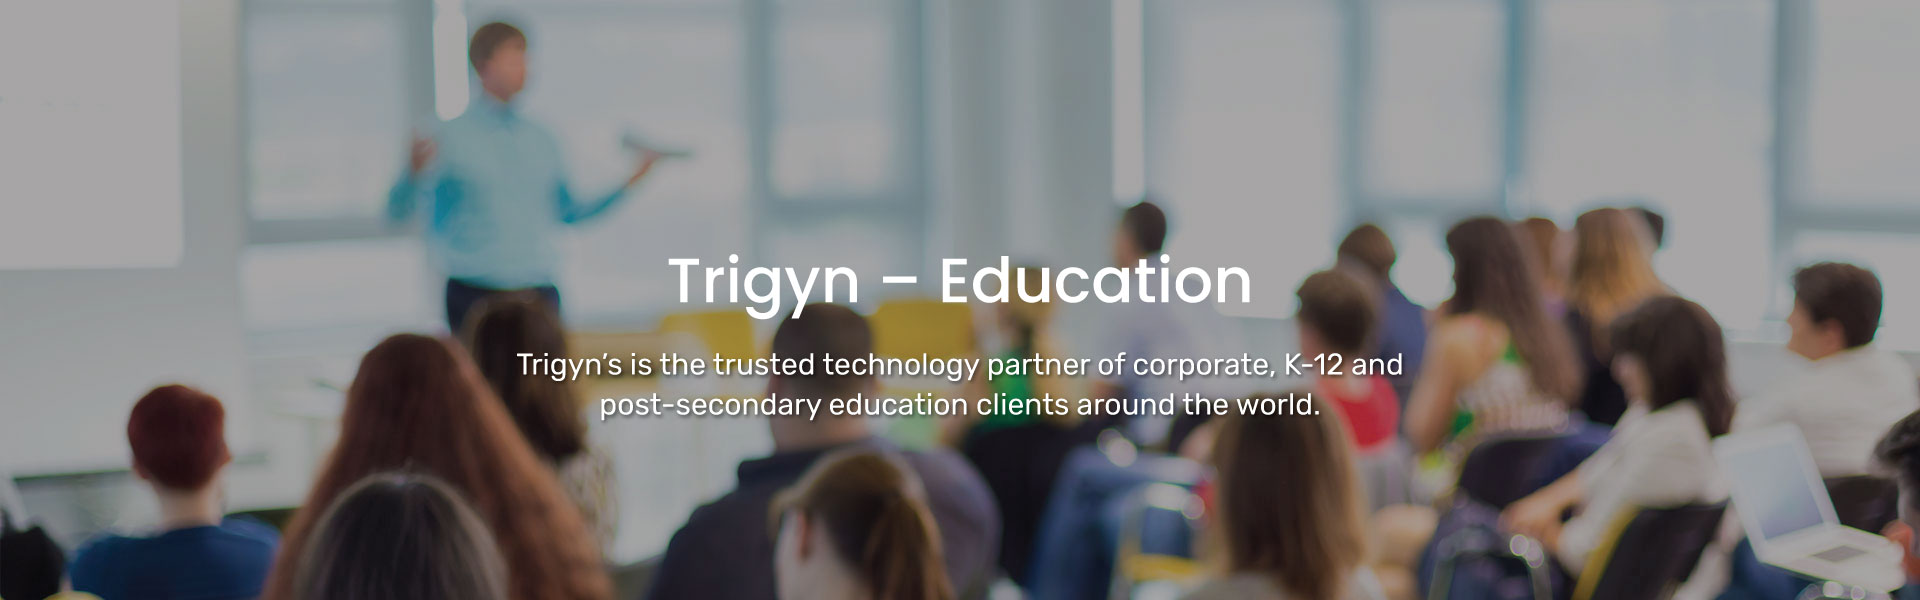 Trigyn’s Education Capabilities